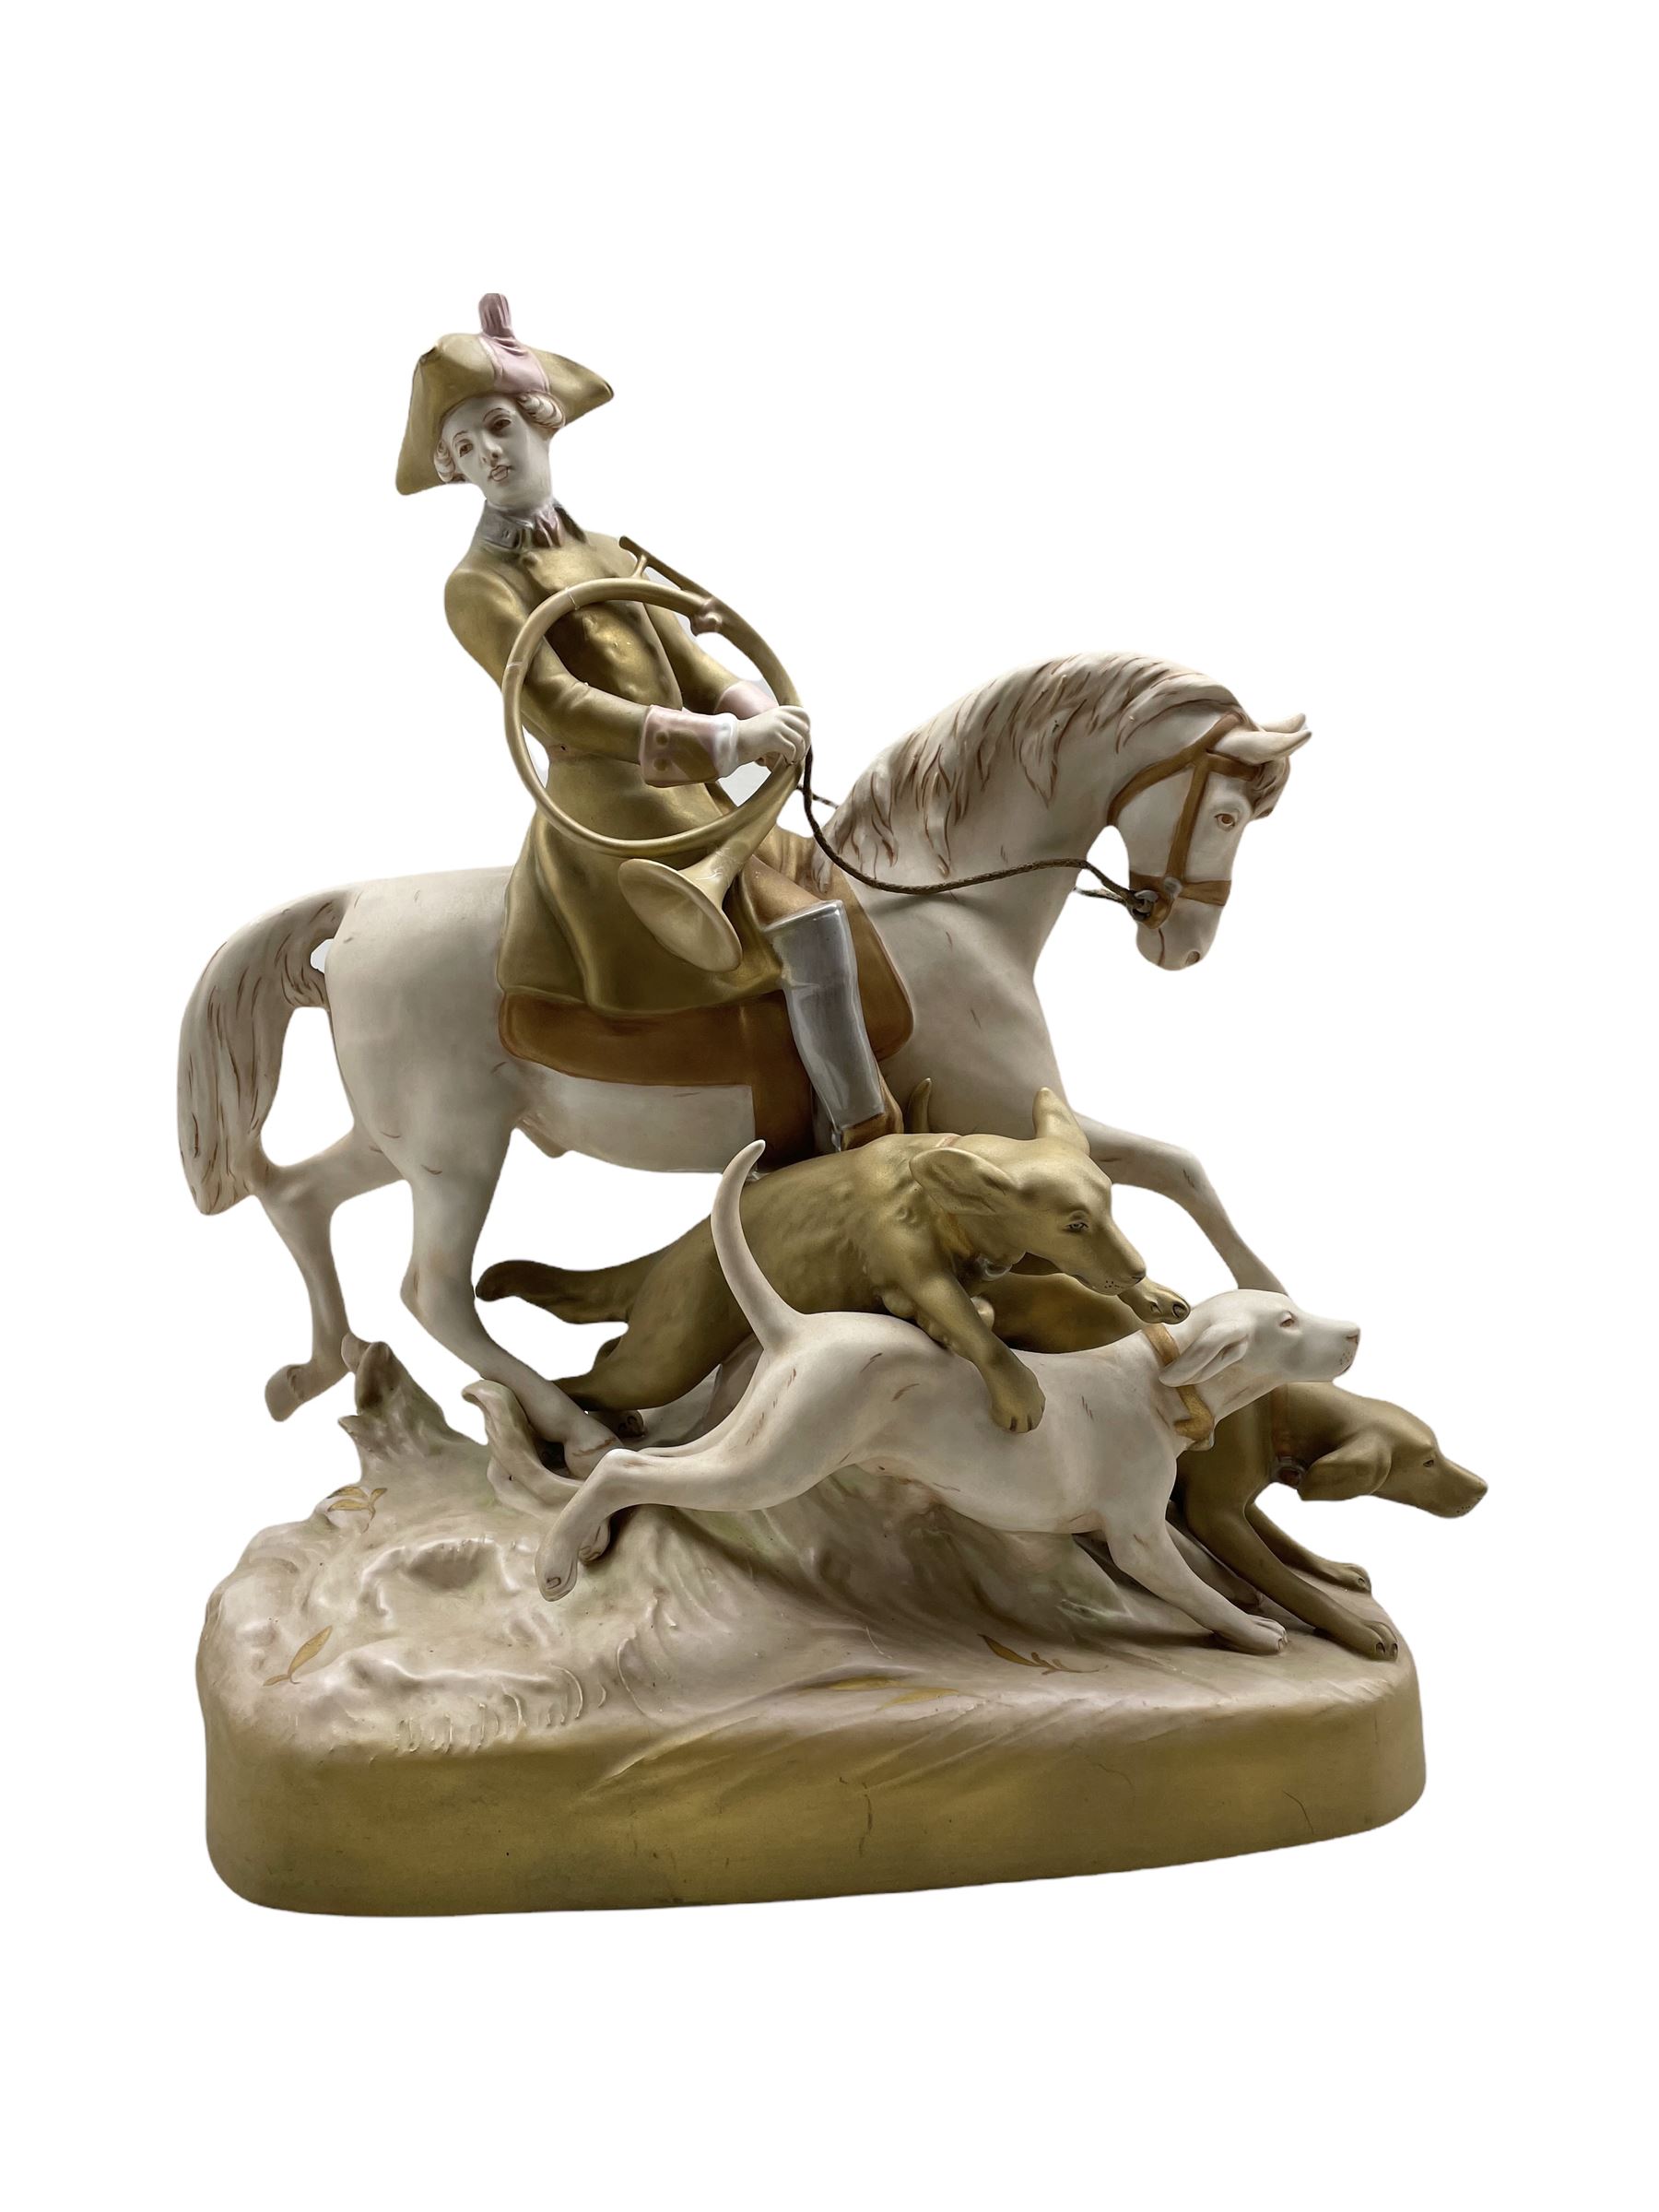 Large Royal Dux porcelain figure of a Huntsman on horseback with three hounds running alongside